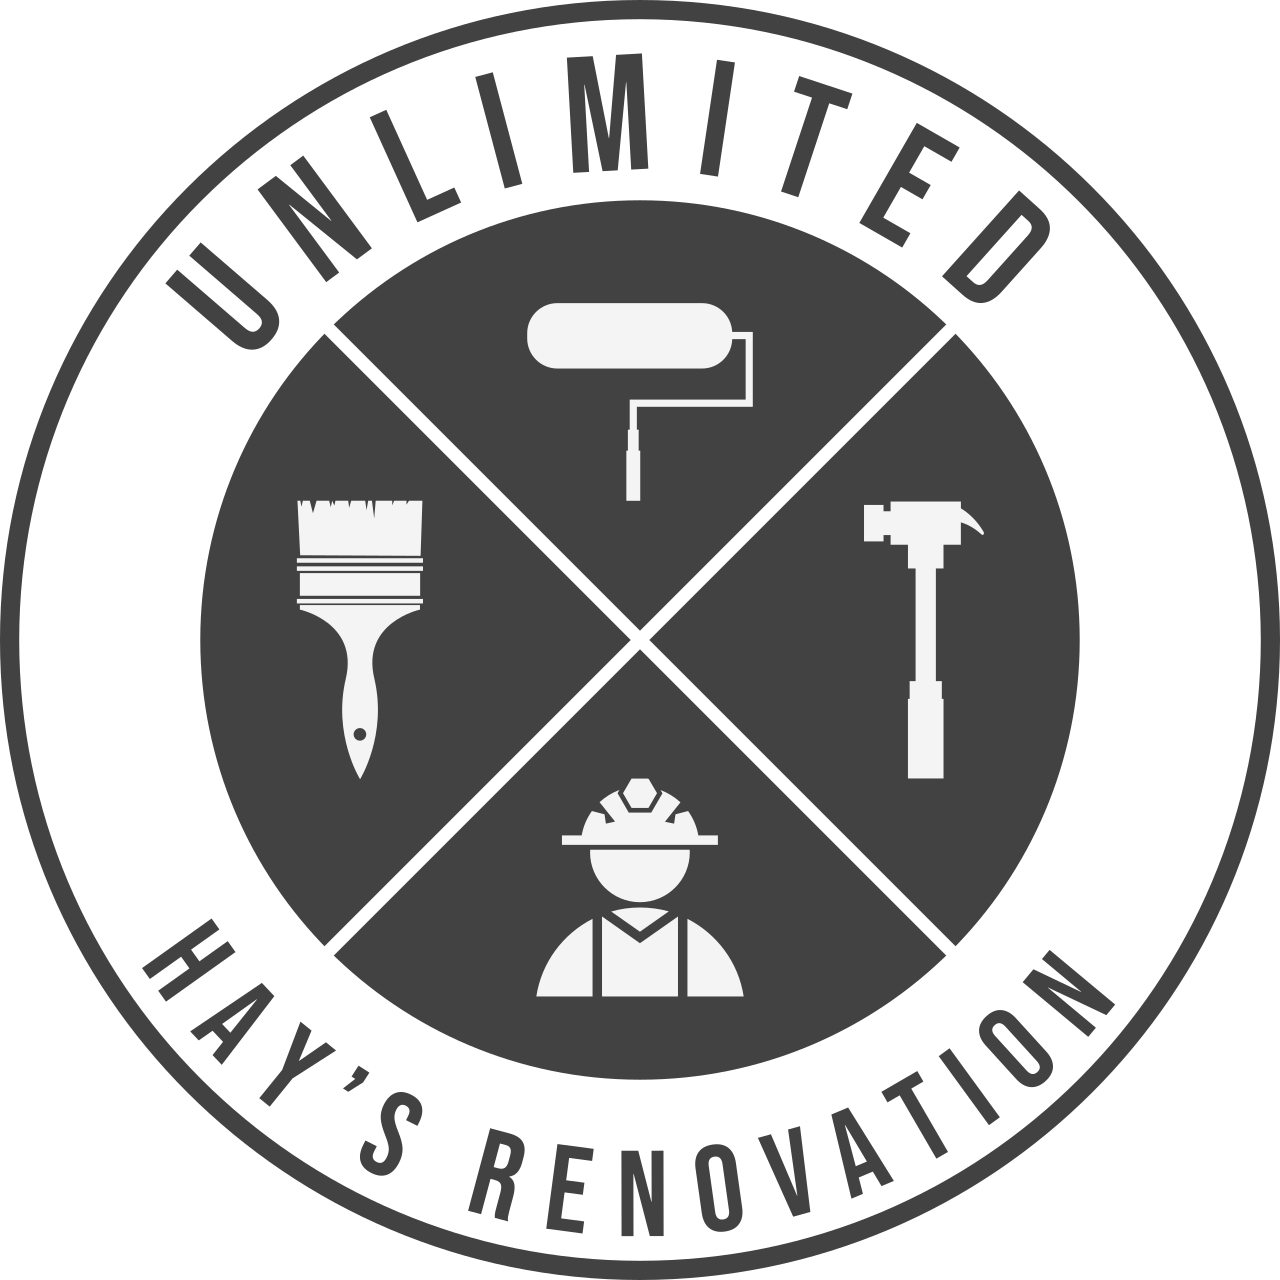 Hay’s renovation 's logo